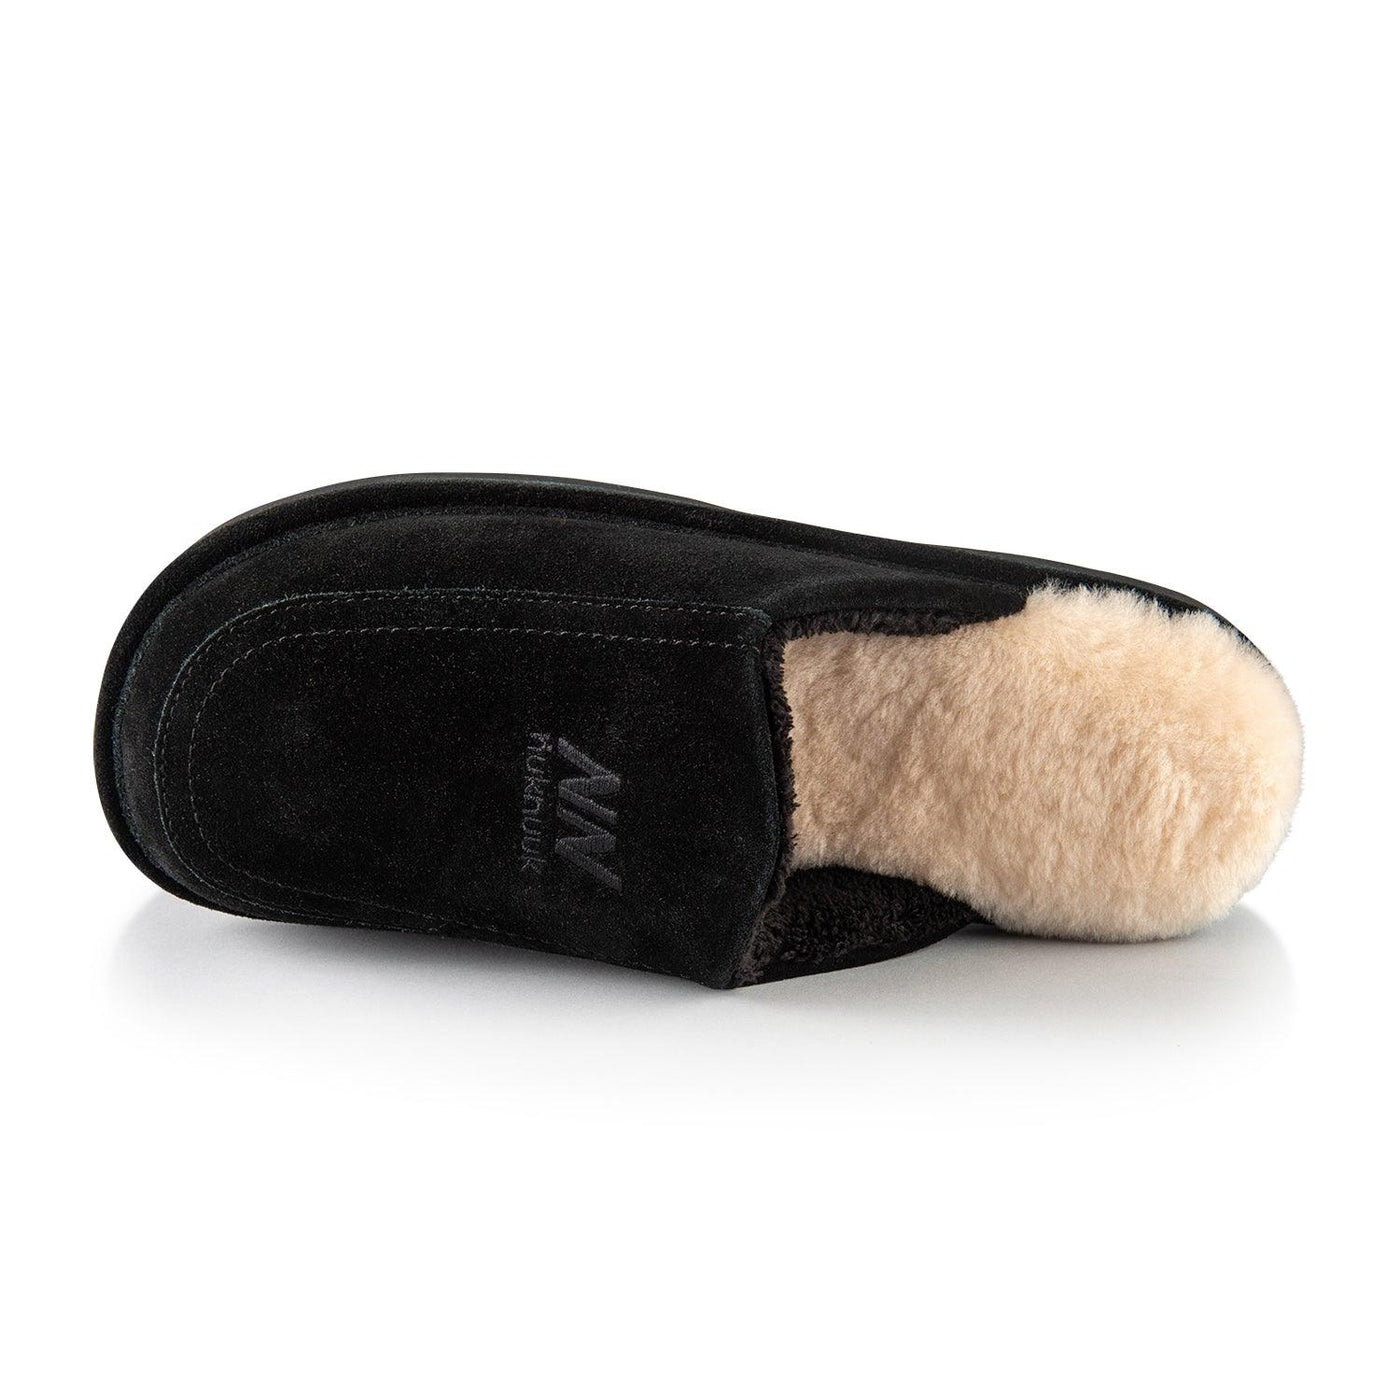 Todd men's slipper (Black) - Nuknuuk